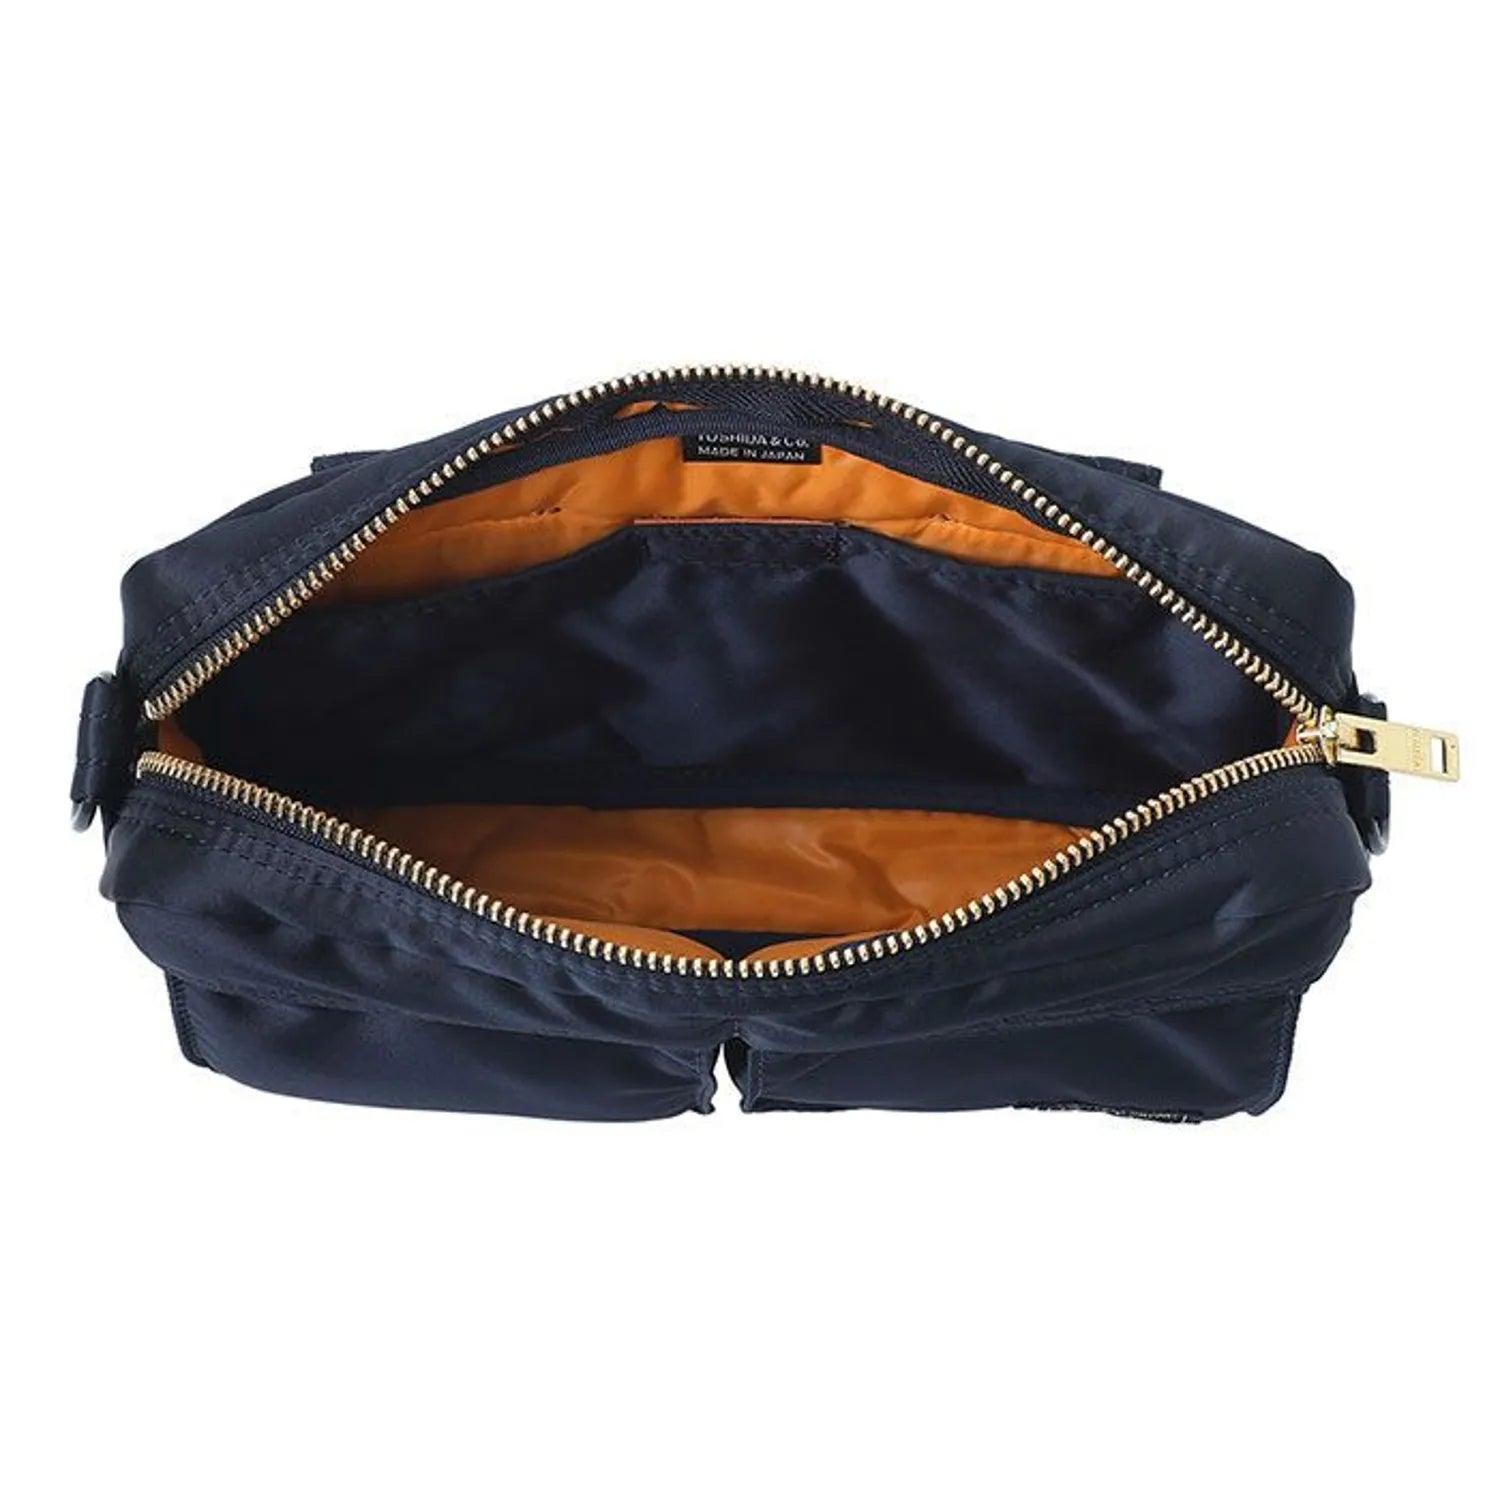 Porter-Yoshida & Co Tanker Shoulder Bag - Iron Blue - One